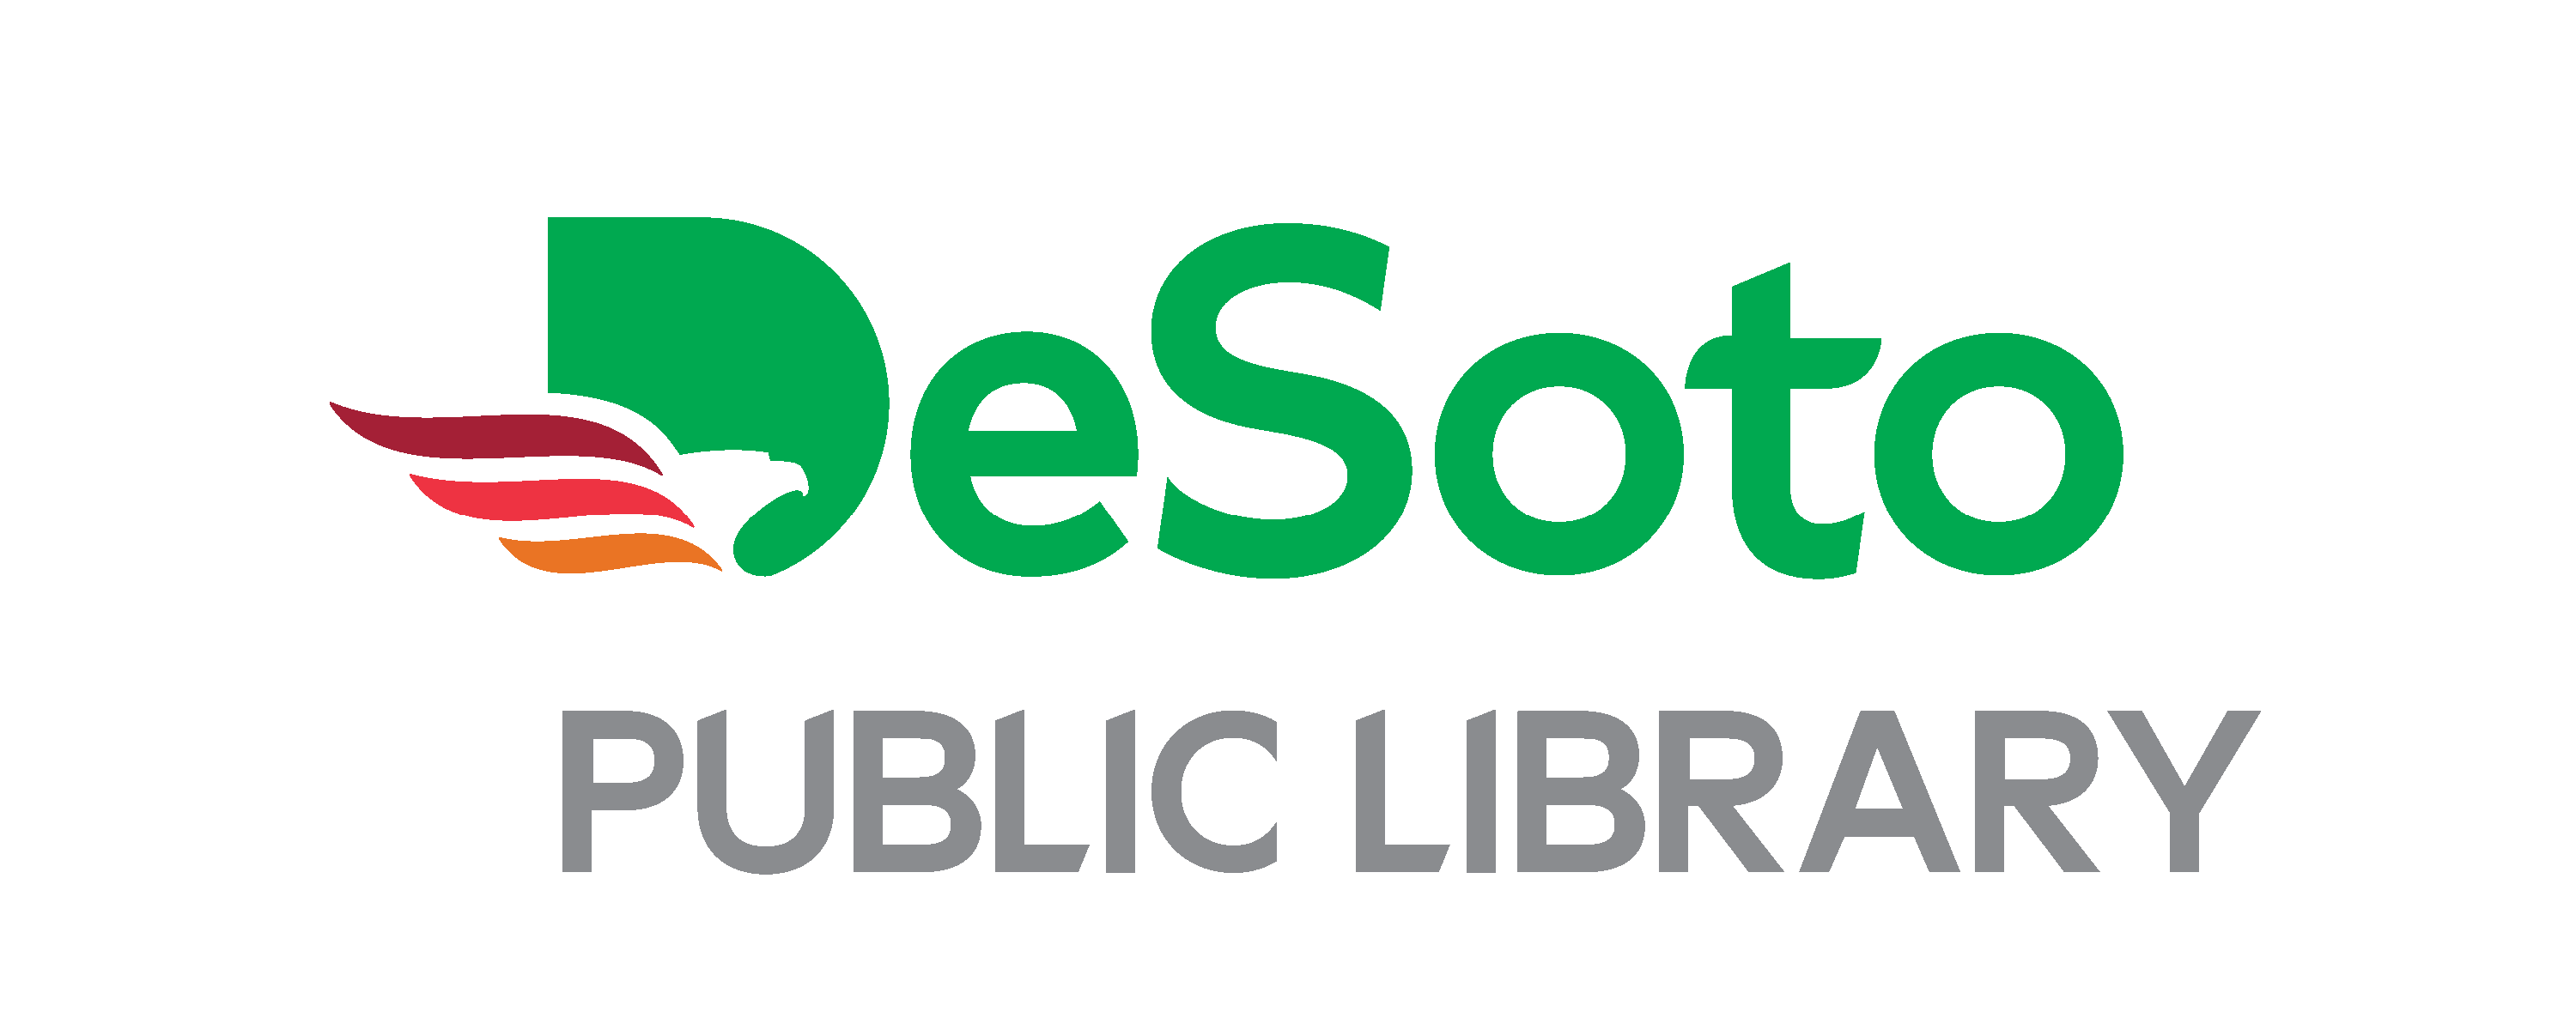 DeSoto Public Library logo